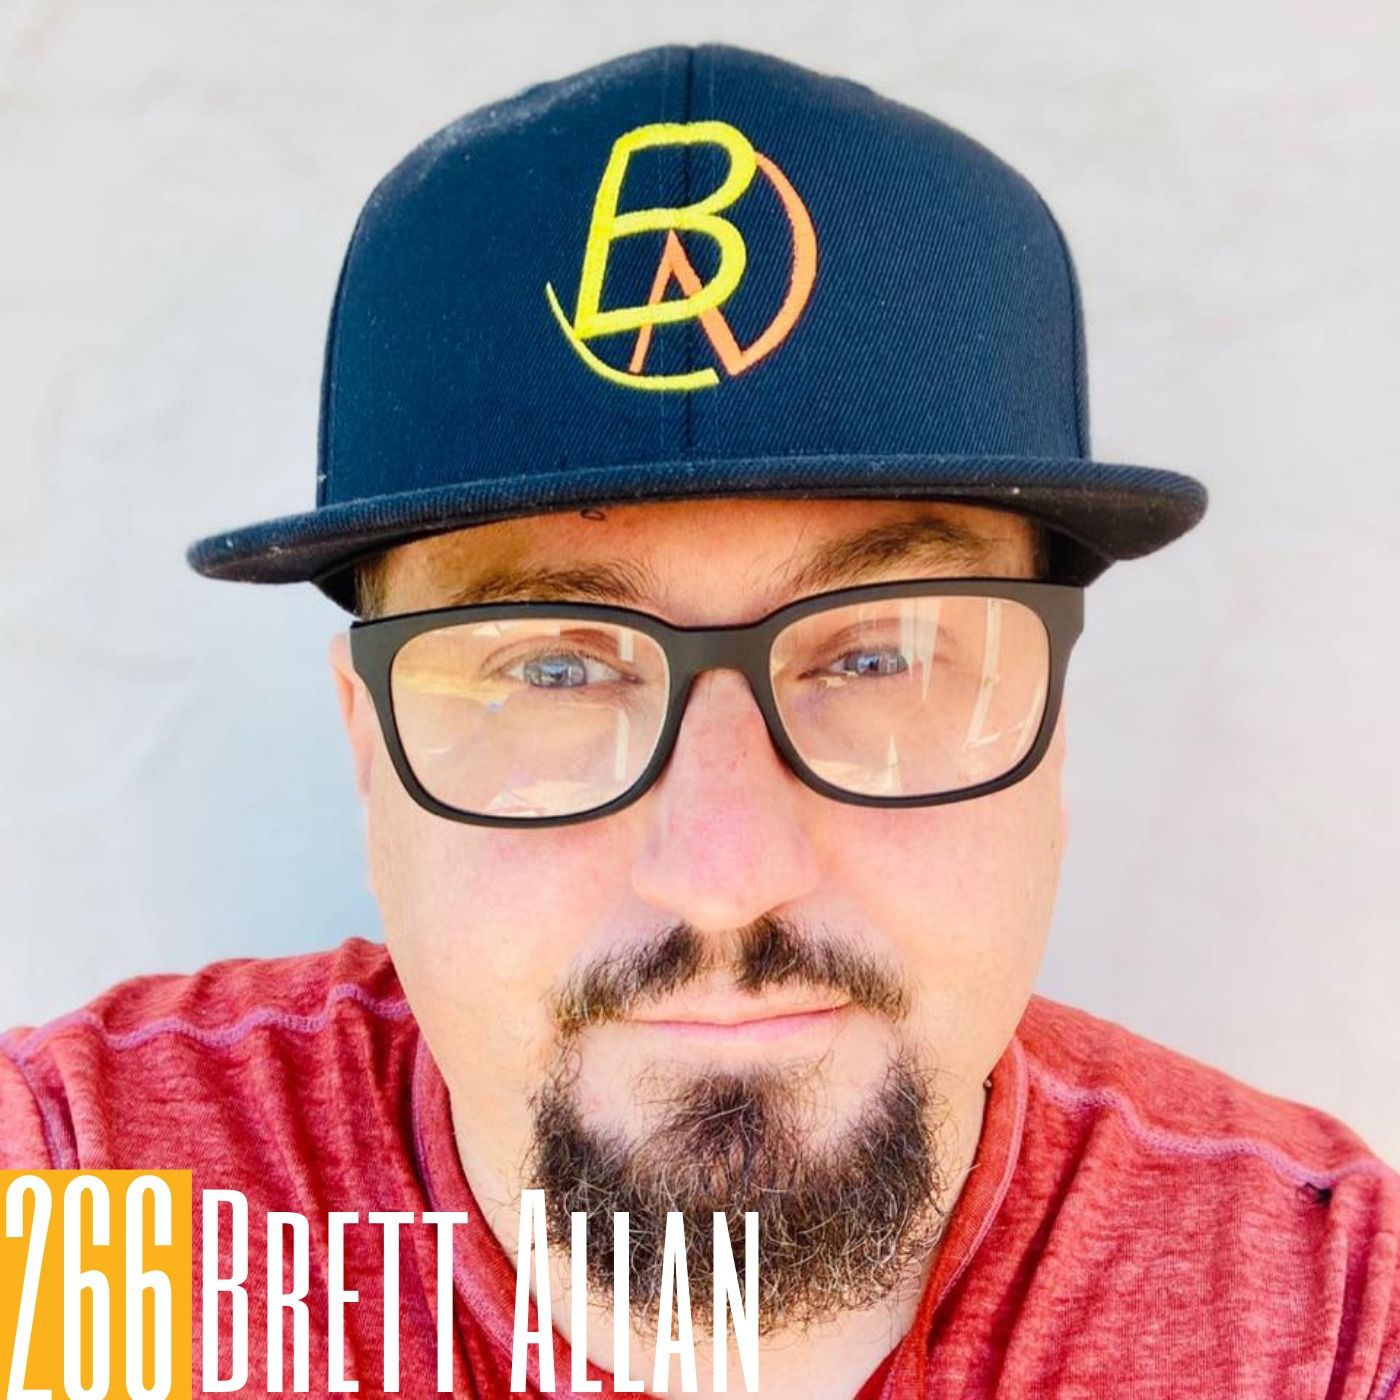 266 Brett Allan - Leaving a Legacy